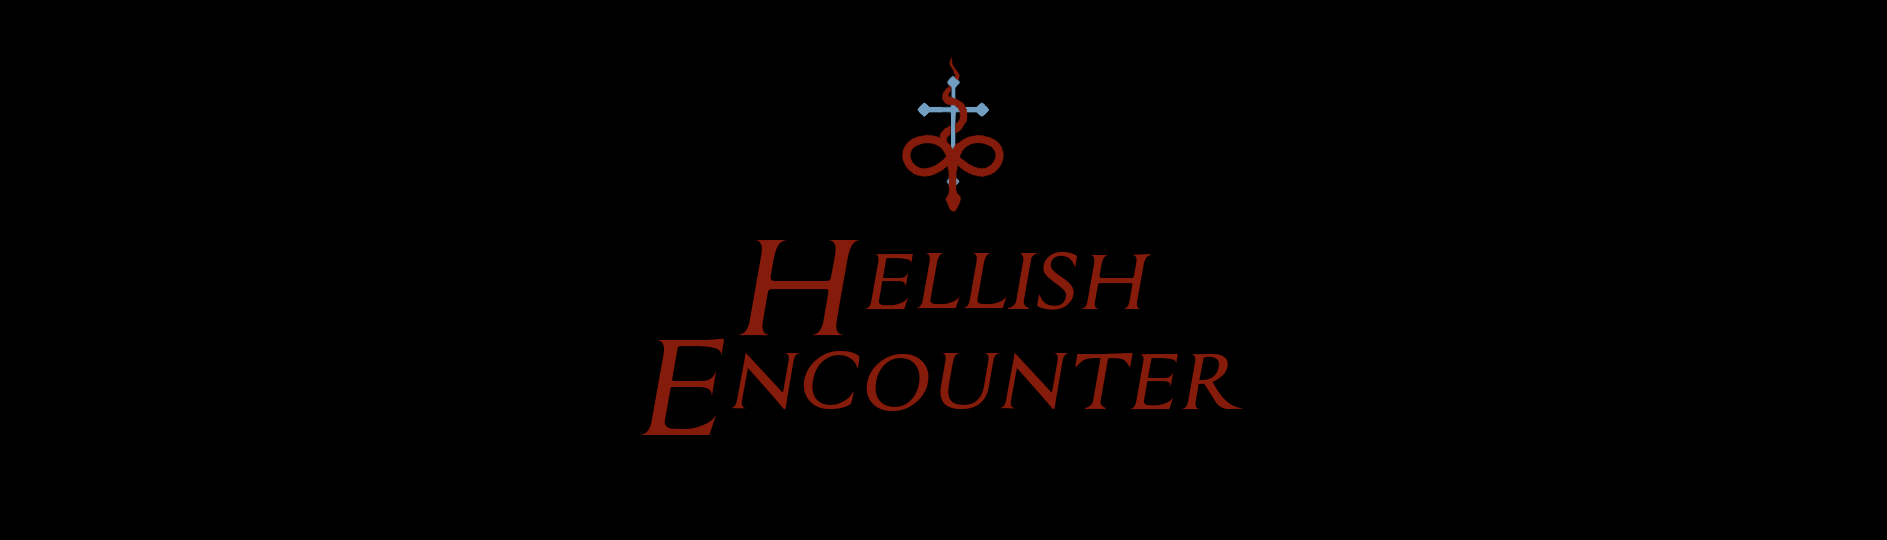 Hellish Encounter